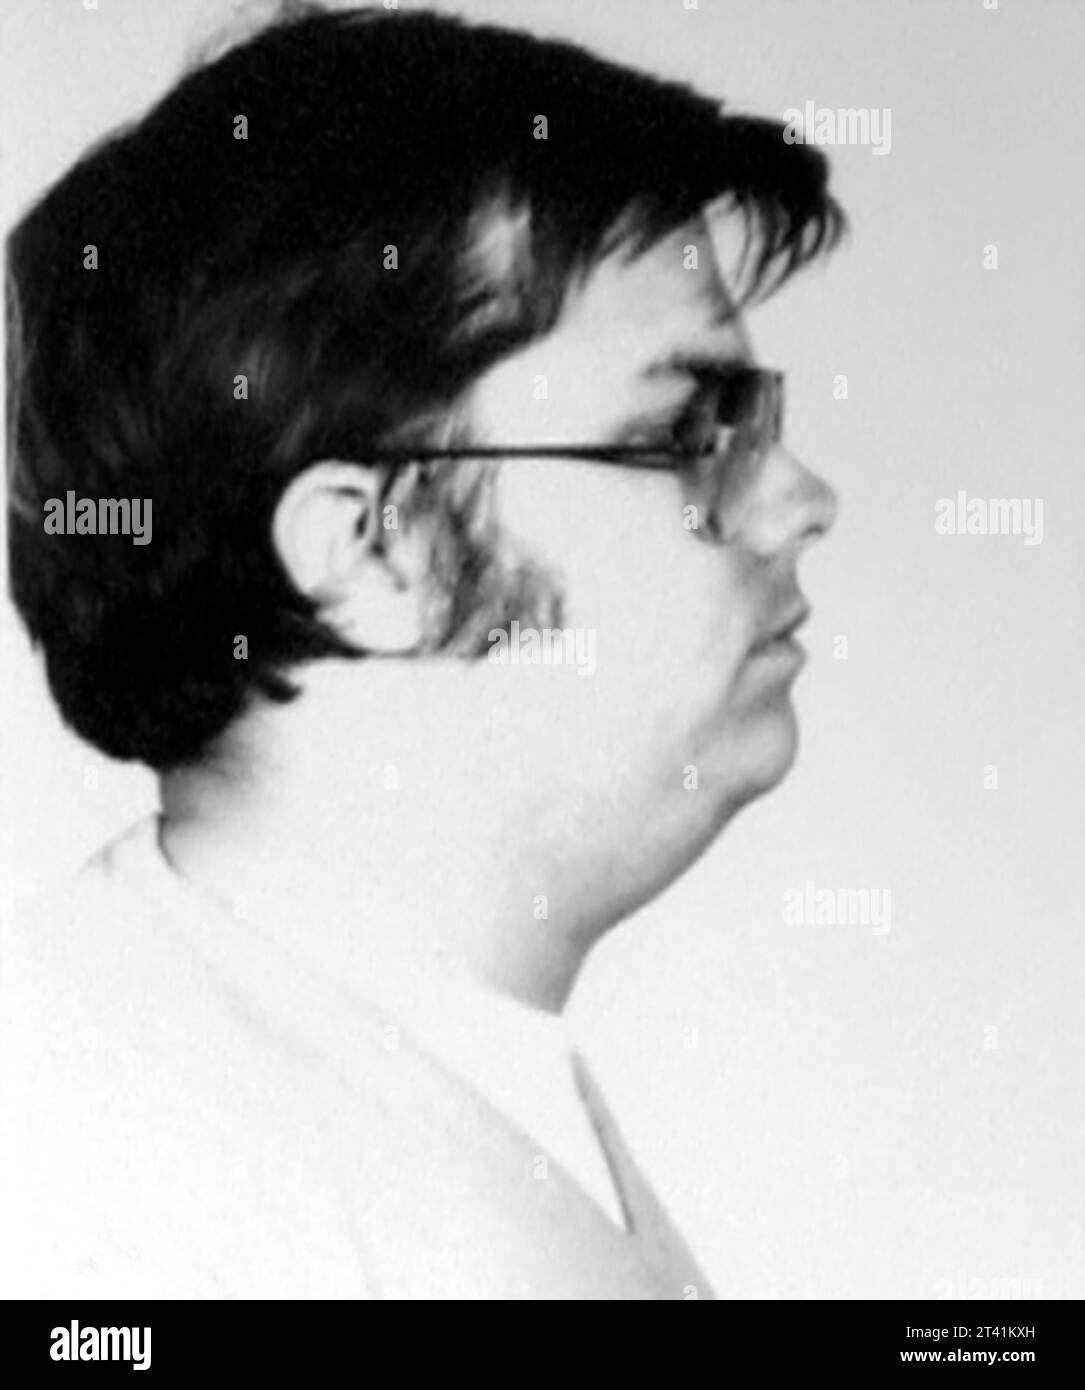 1980 , 9 december, NEW YORK , USA: The John Lennon killer , the american DAVID MARK CHAPMAN ( born 10 may 1955 ) . NEW YORK Police Department's mug shot of the assassin of ex-Beatles singer and composer JOHN LENNON ( 1940 - 1980 ) whitout a reason, killed in front at Dakota House the day 8 december 1980 . Unknown photographer  after arrestation the day 9 december . - portrait - portrait - police mugshot - MUG-SHOT - murderer - CRIME - KILLER - CRONACA NERA - MUSIC - MUSICA - lens - Ray-Ban - occhiali da vista  - profilo - profile --- GBB Archive Stock Photo